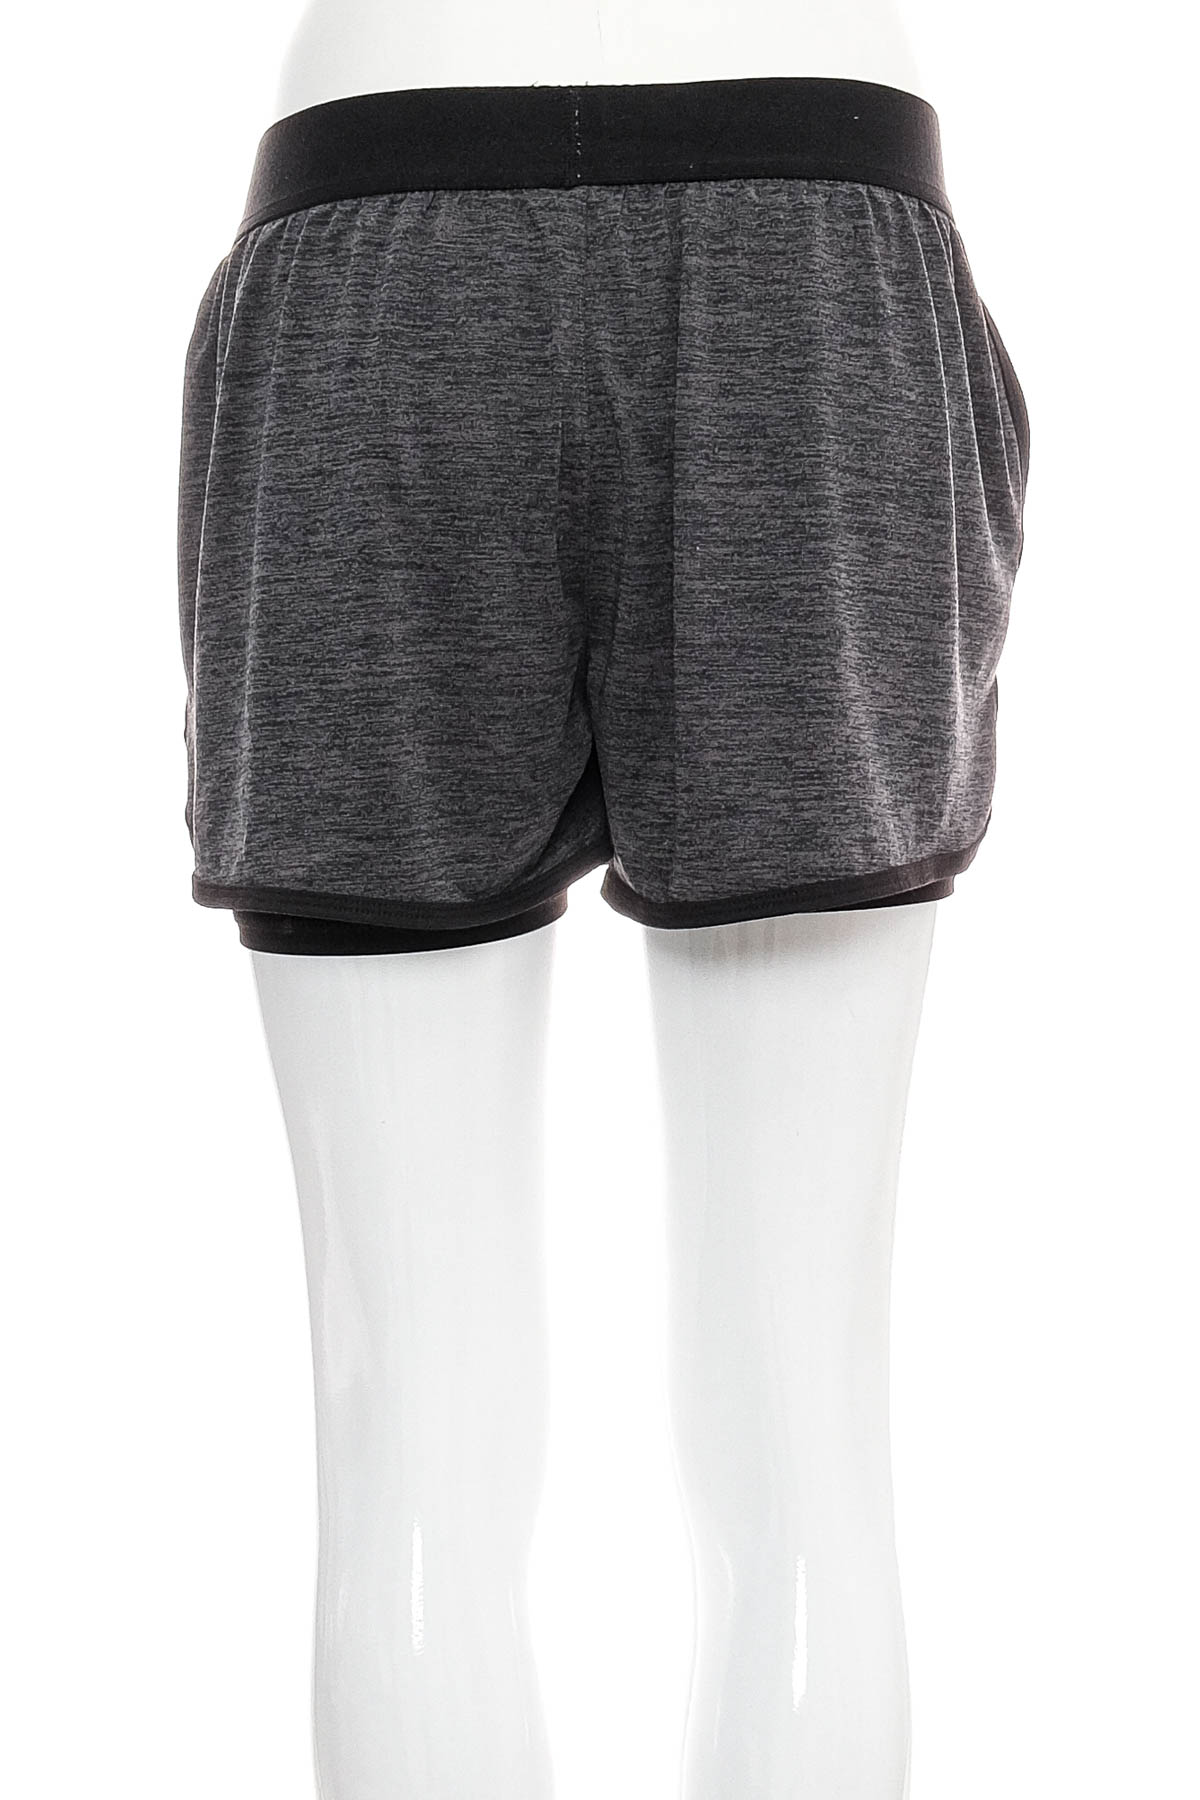 Women's shorts - AVIA - 1